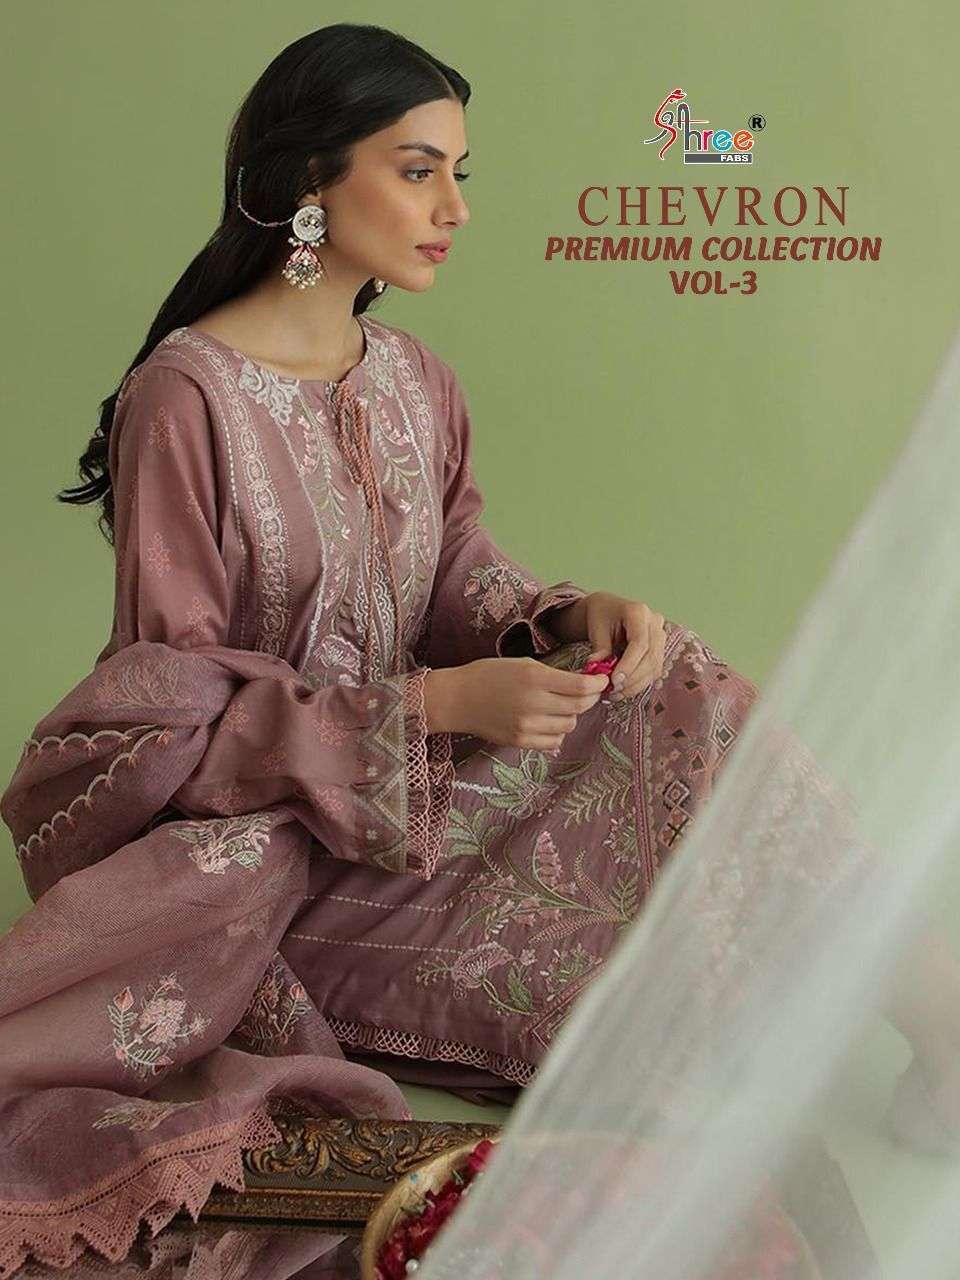 Shree Fabs Chevron Premium Collection vol 3 Lawn cotton with...